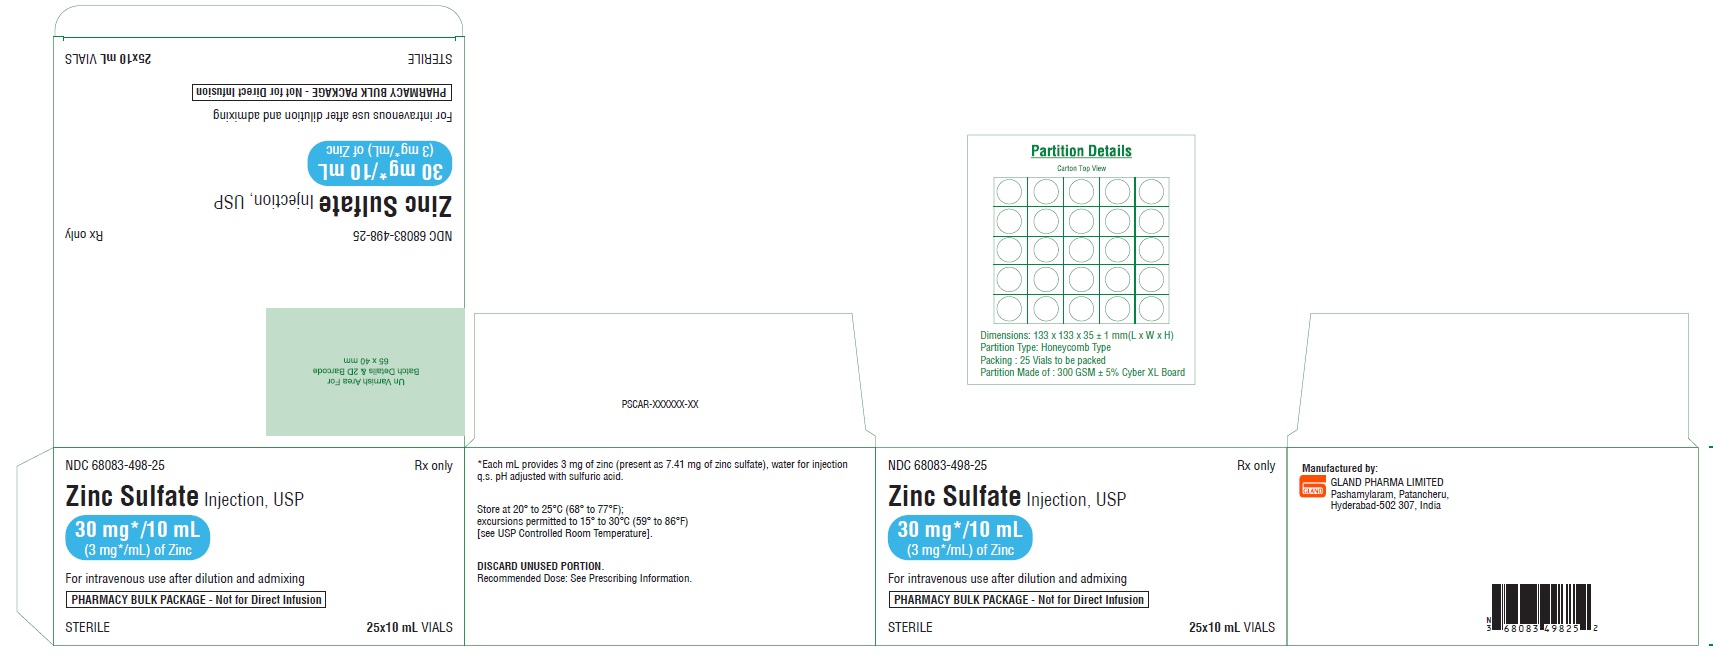 zincsulfate-spl-carton-label-3mg-per-ml